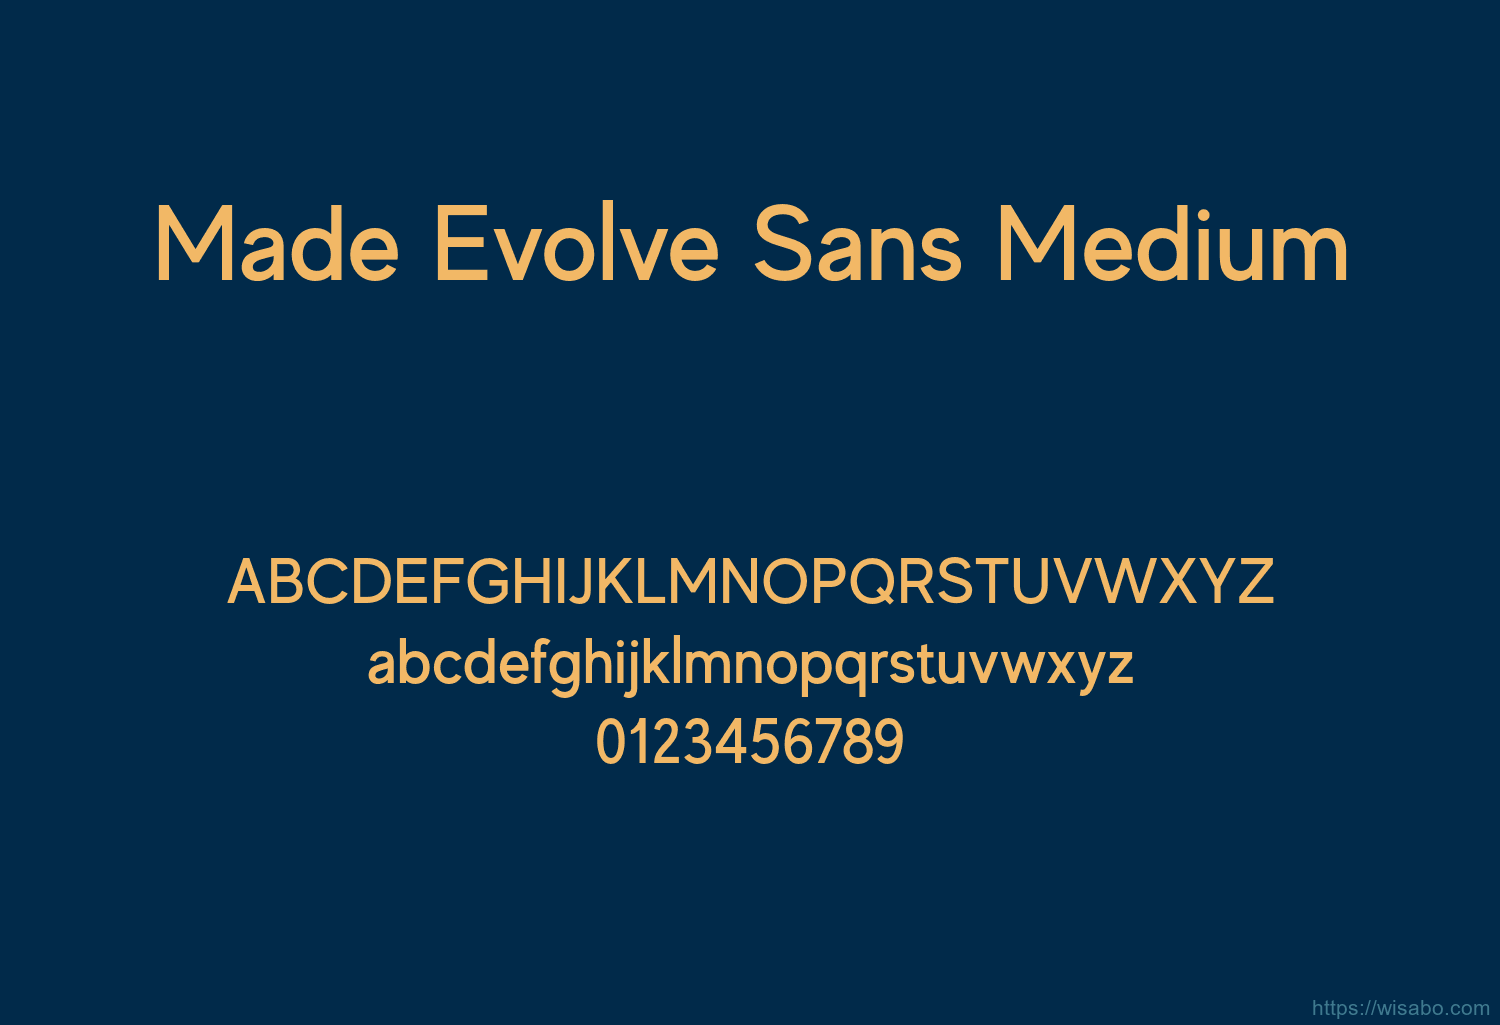 Made Evolve Sans Medium